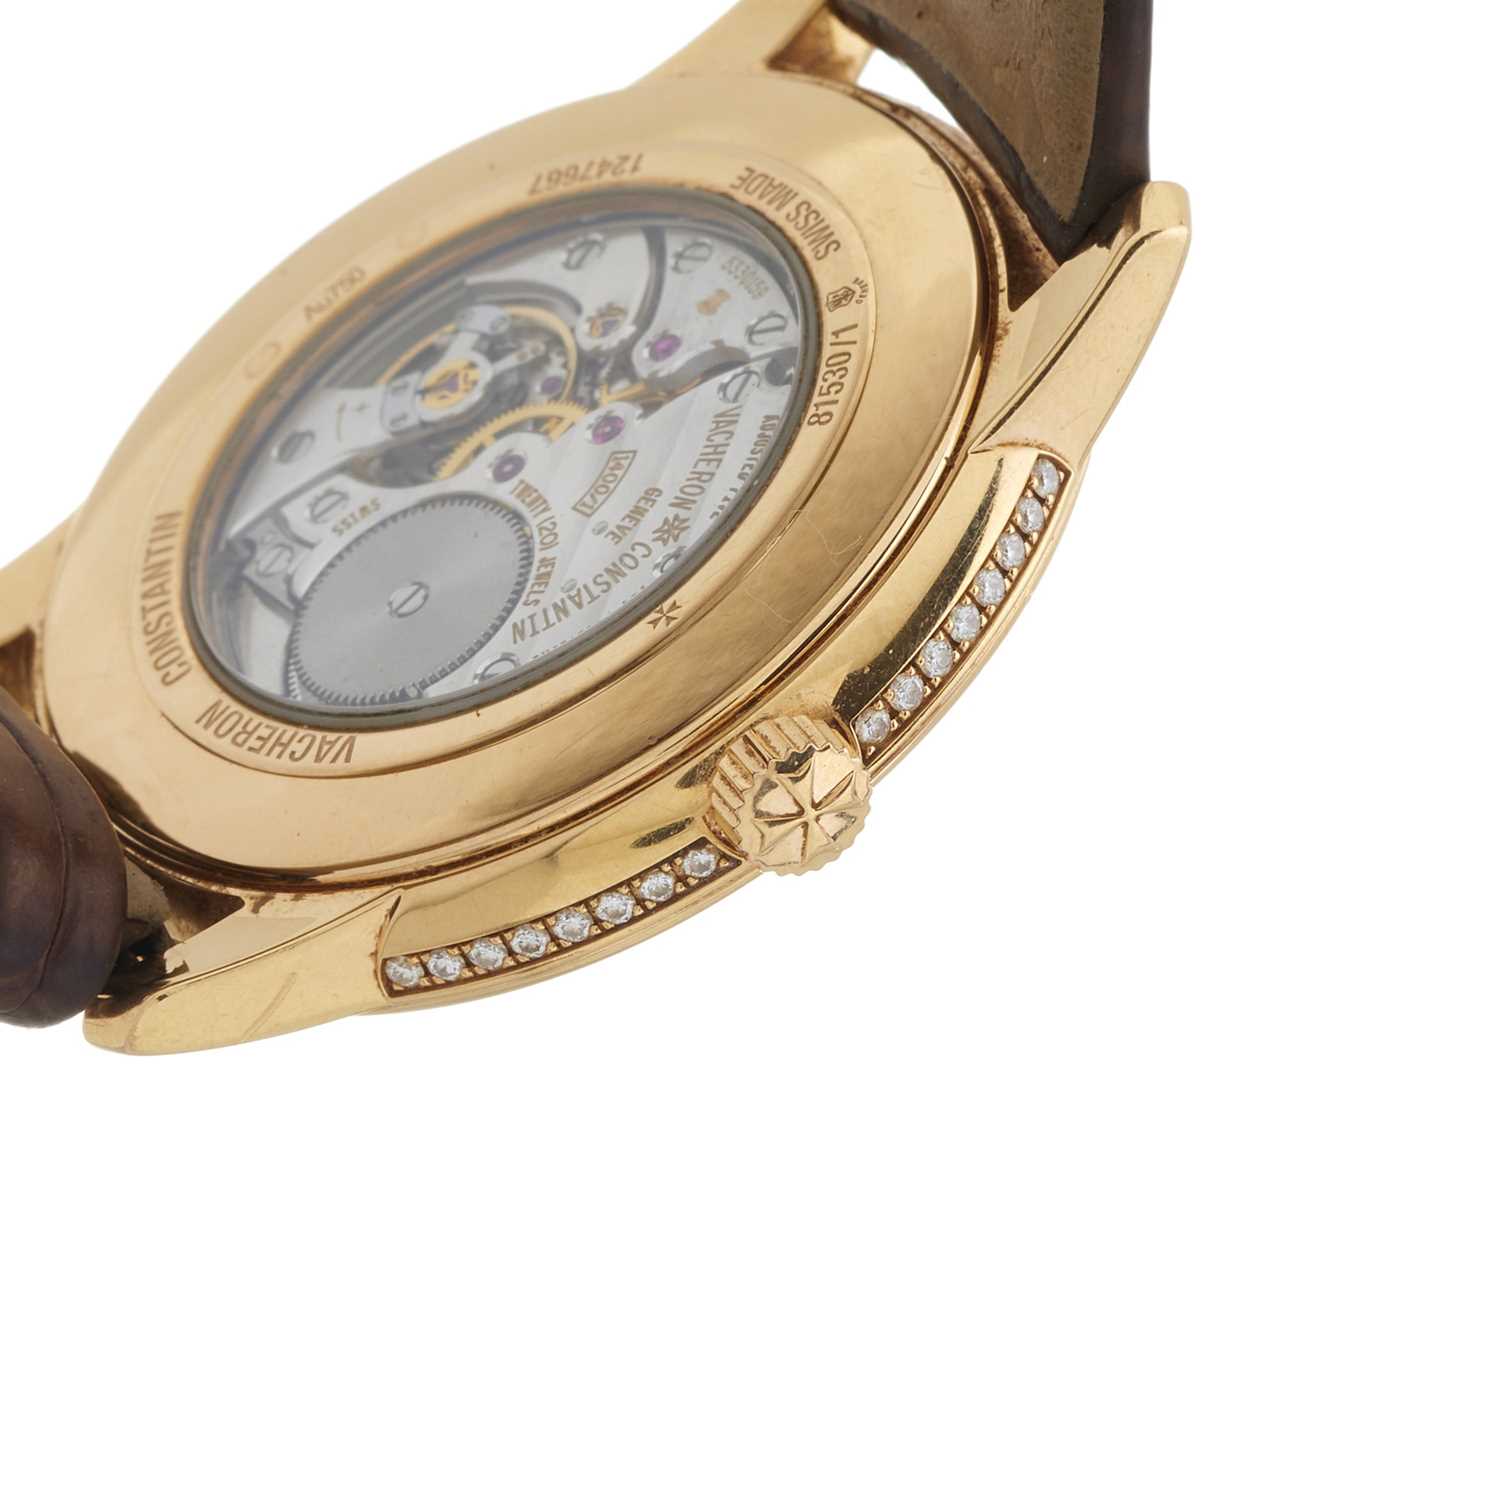 Vacheron Constantin, an 18ct pink gold Patrimony wrist watch - Image 3 of 4